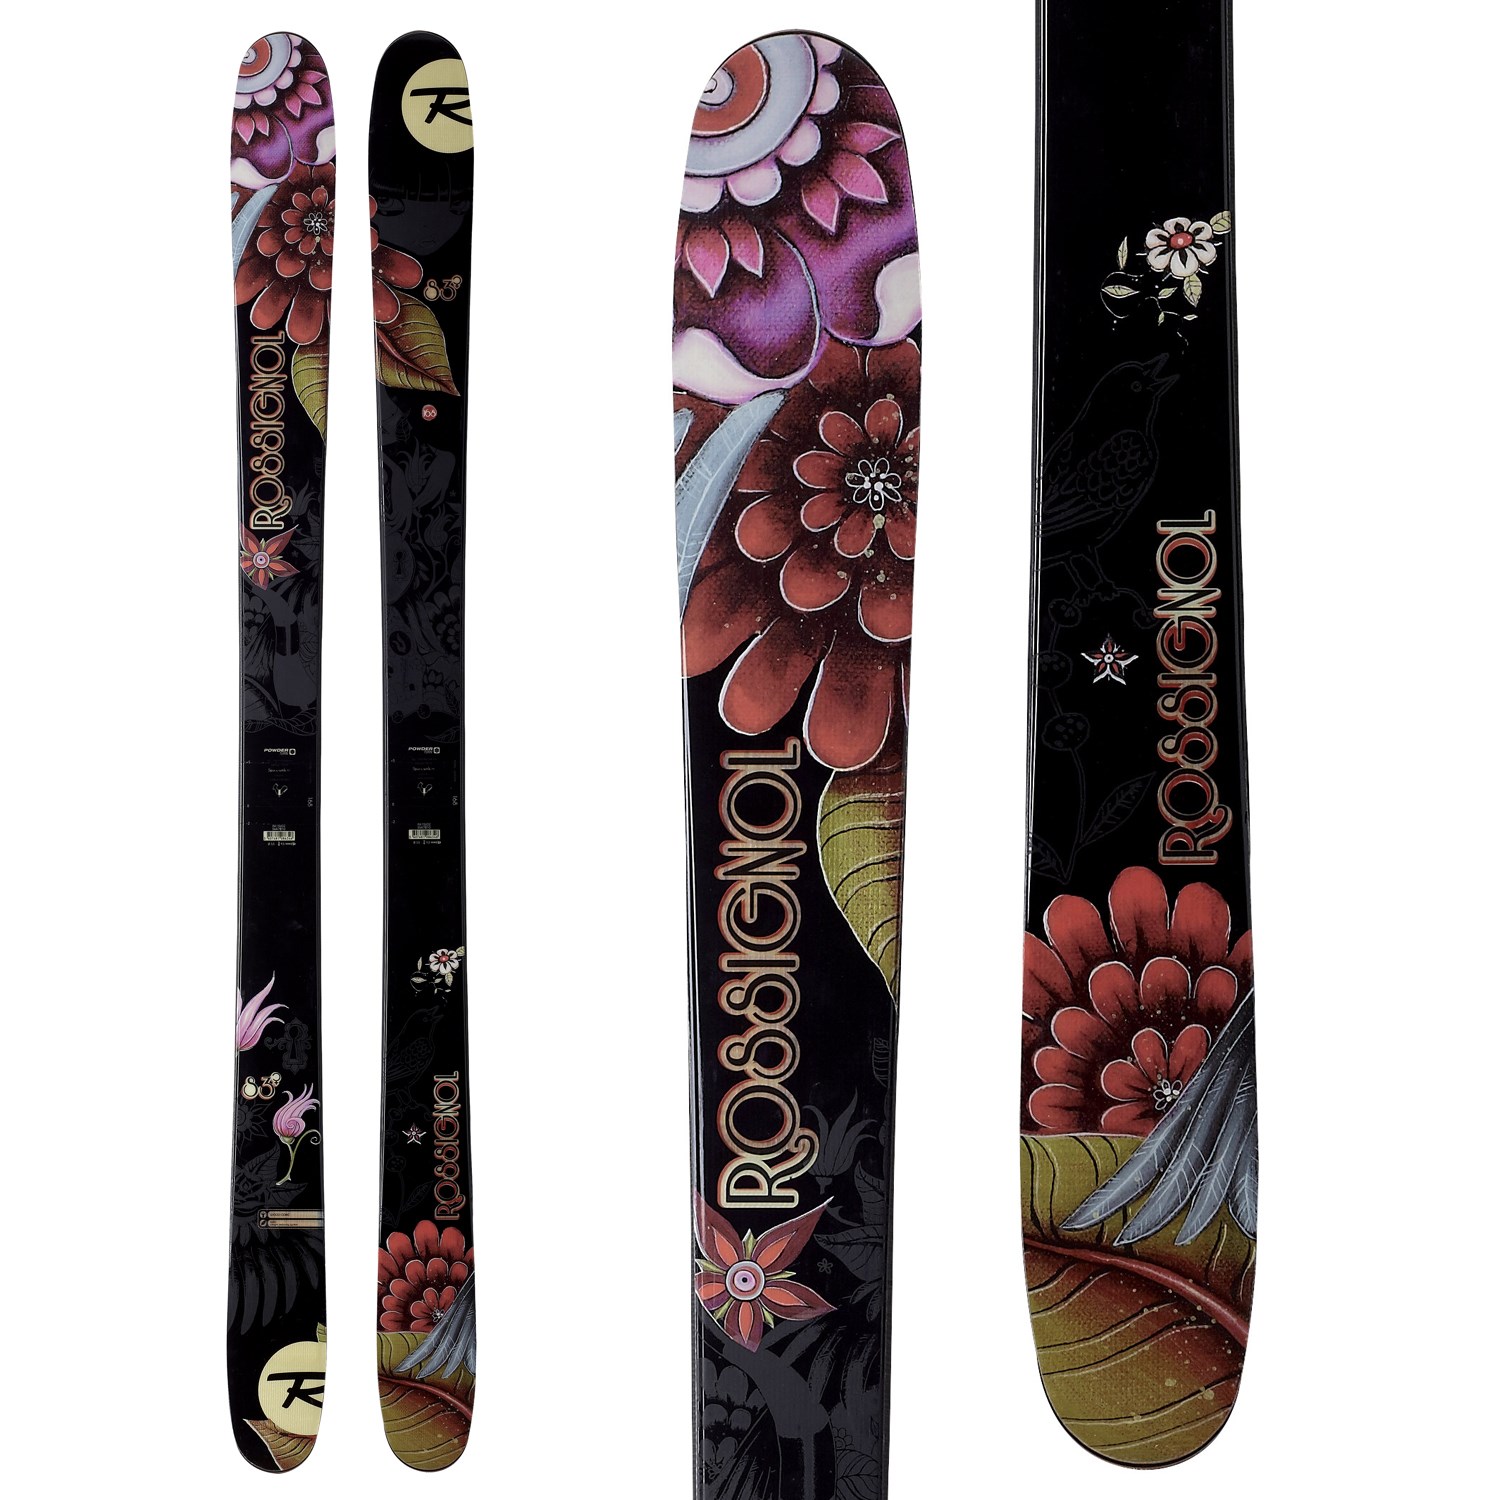 rossignol women's downhill skis